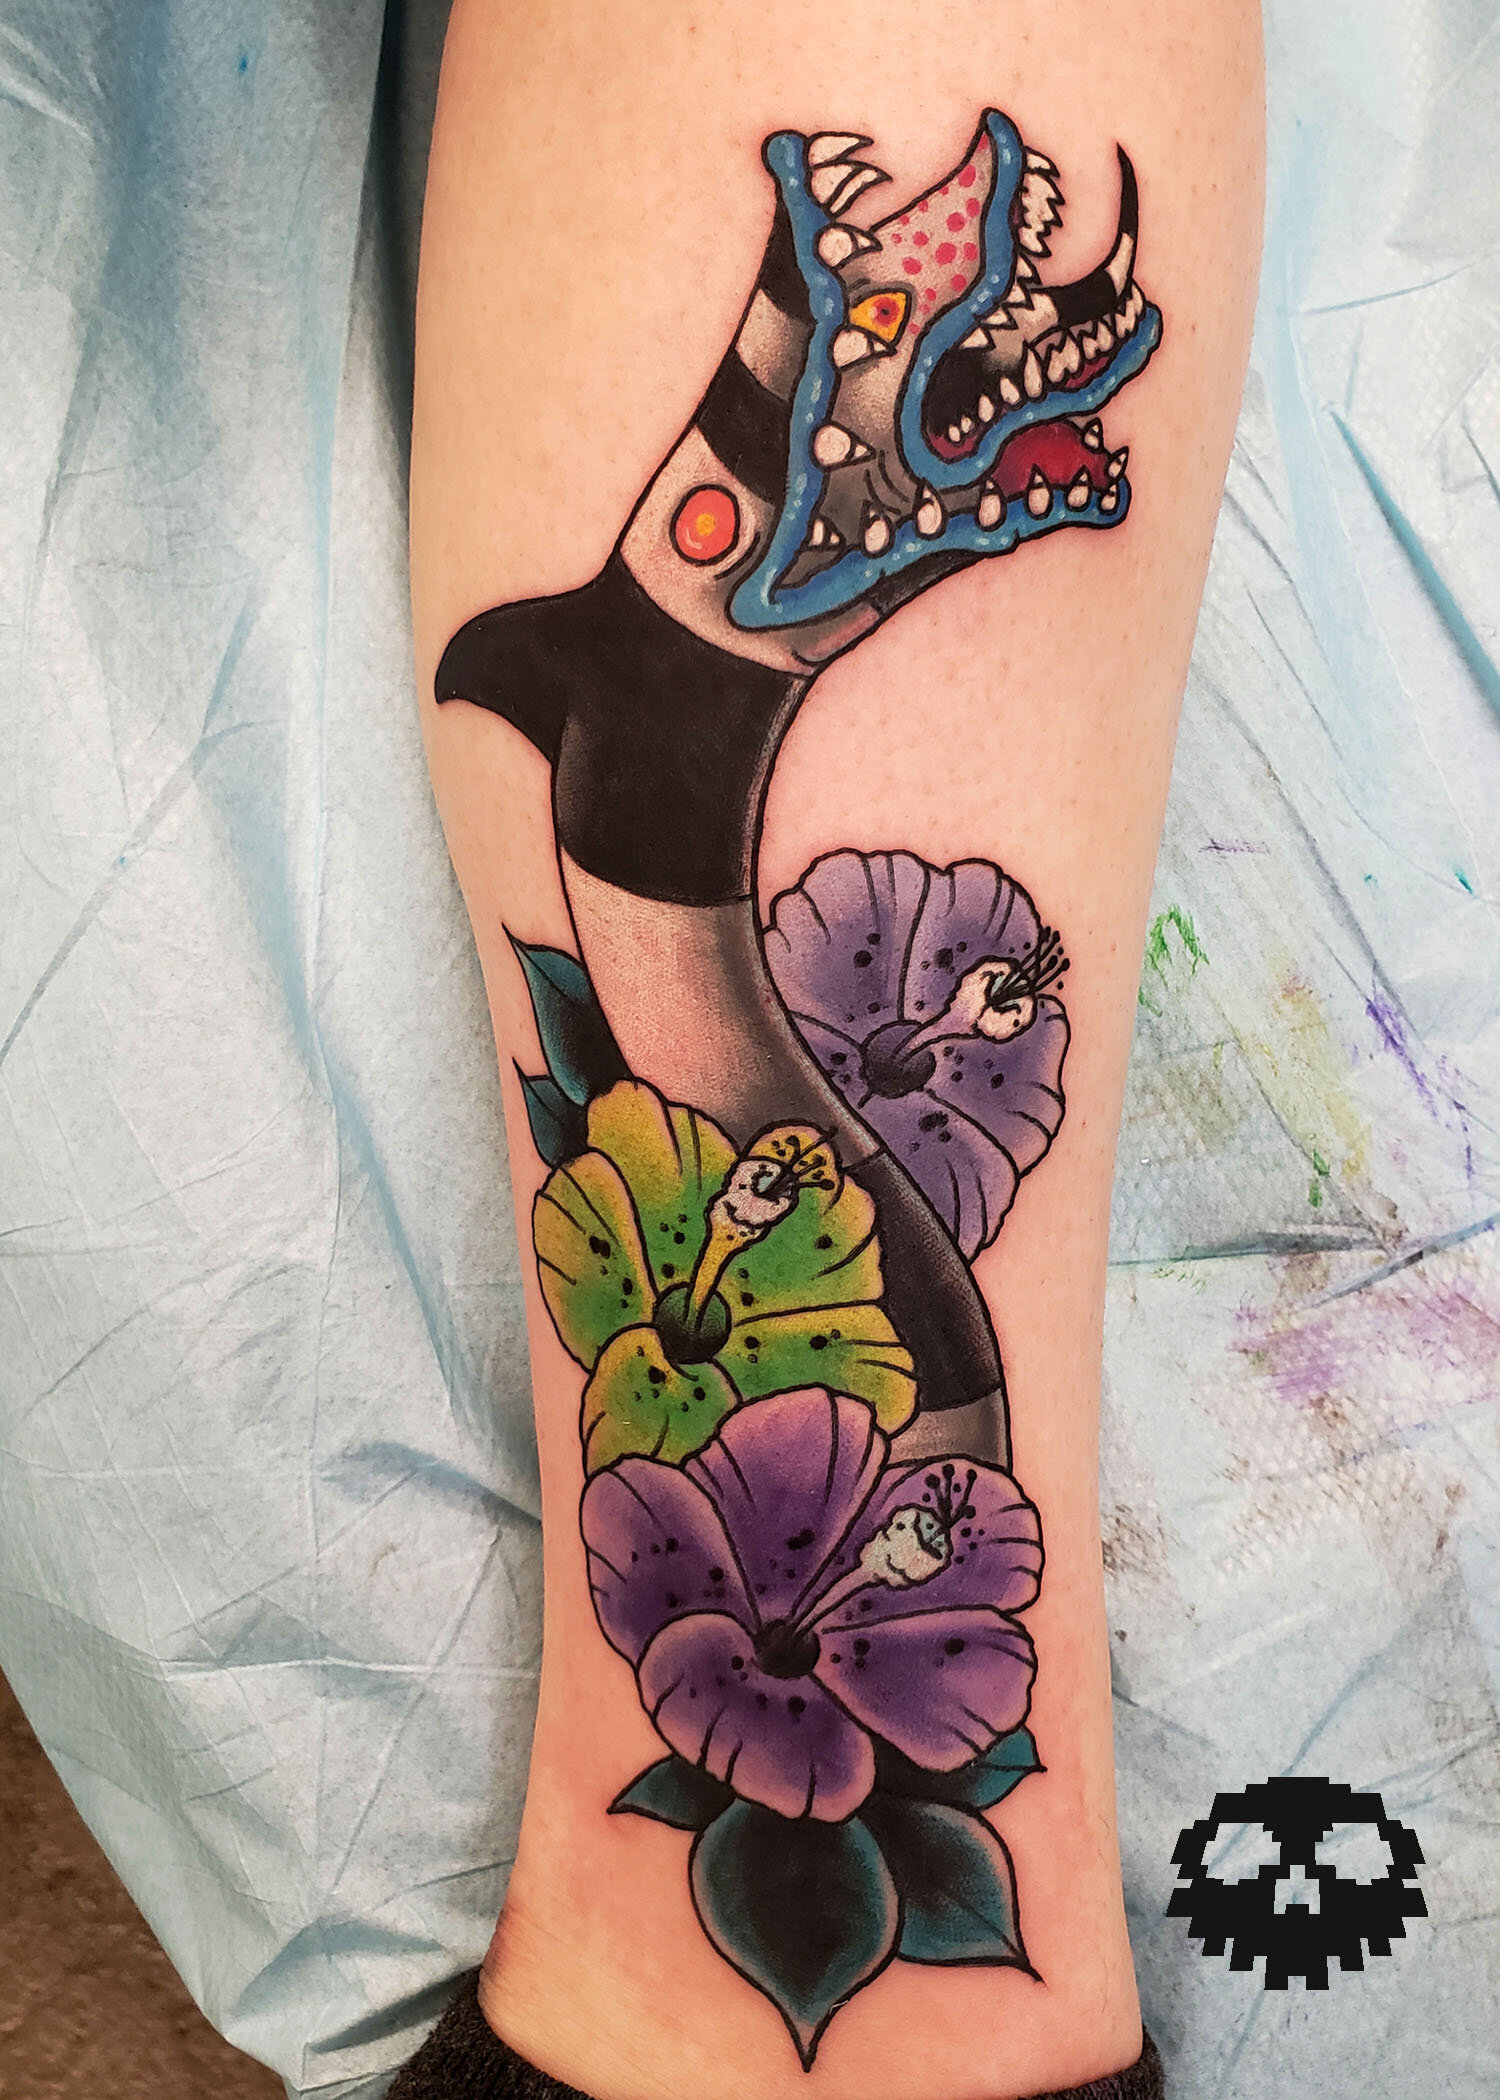 Beetlejuice tattoo flash colored by truemattstory on DeviantArt